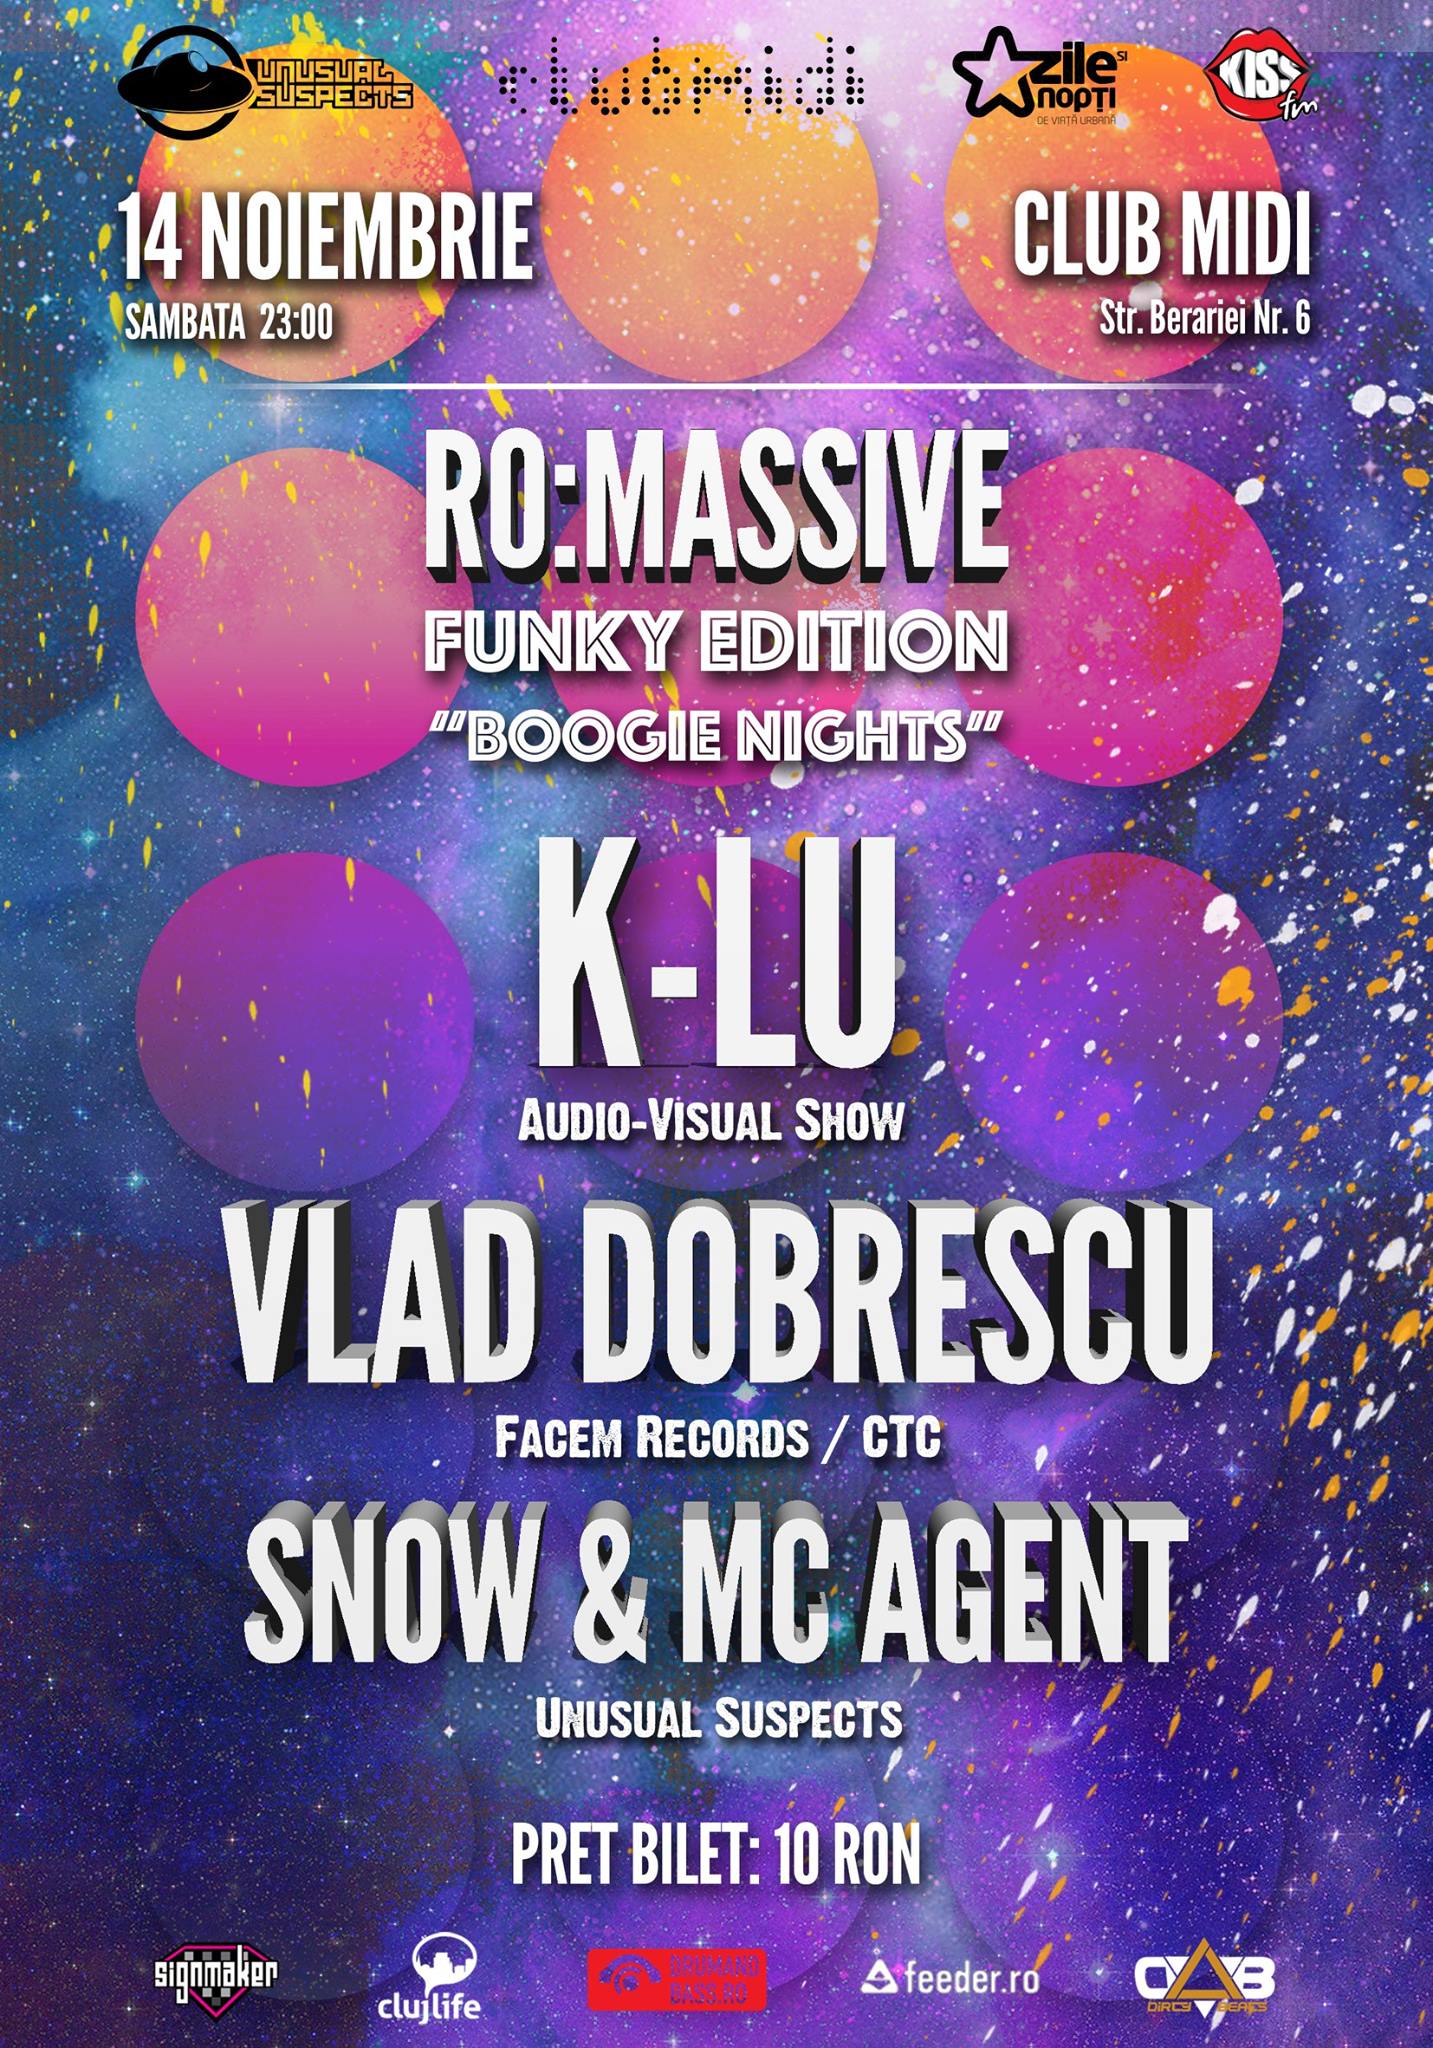 K-LU & Vlad Dobrescu @ Club Midi